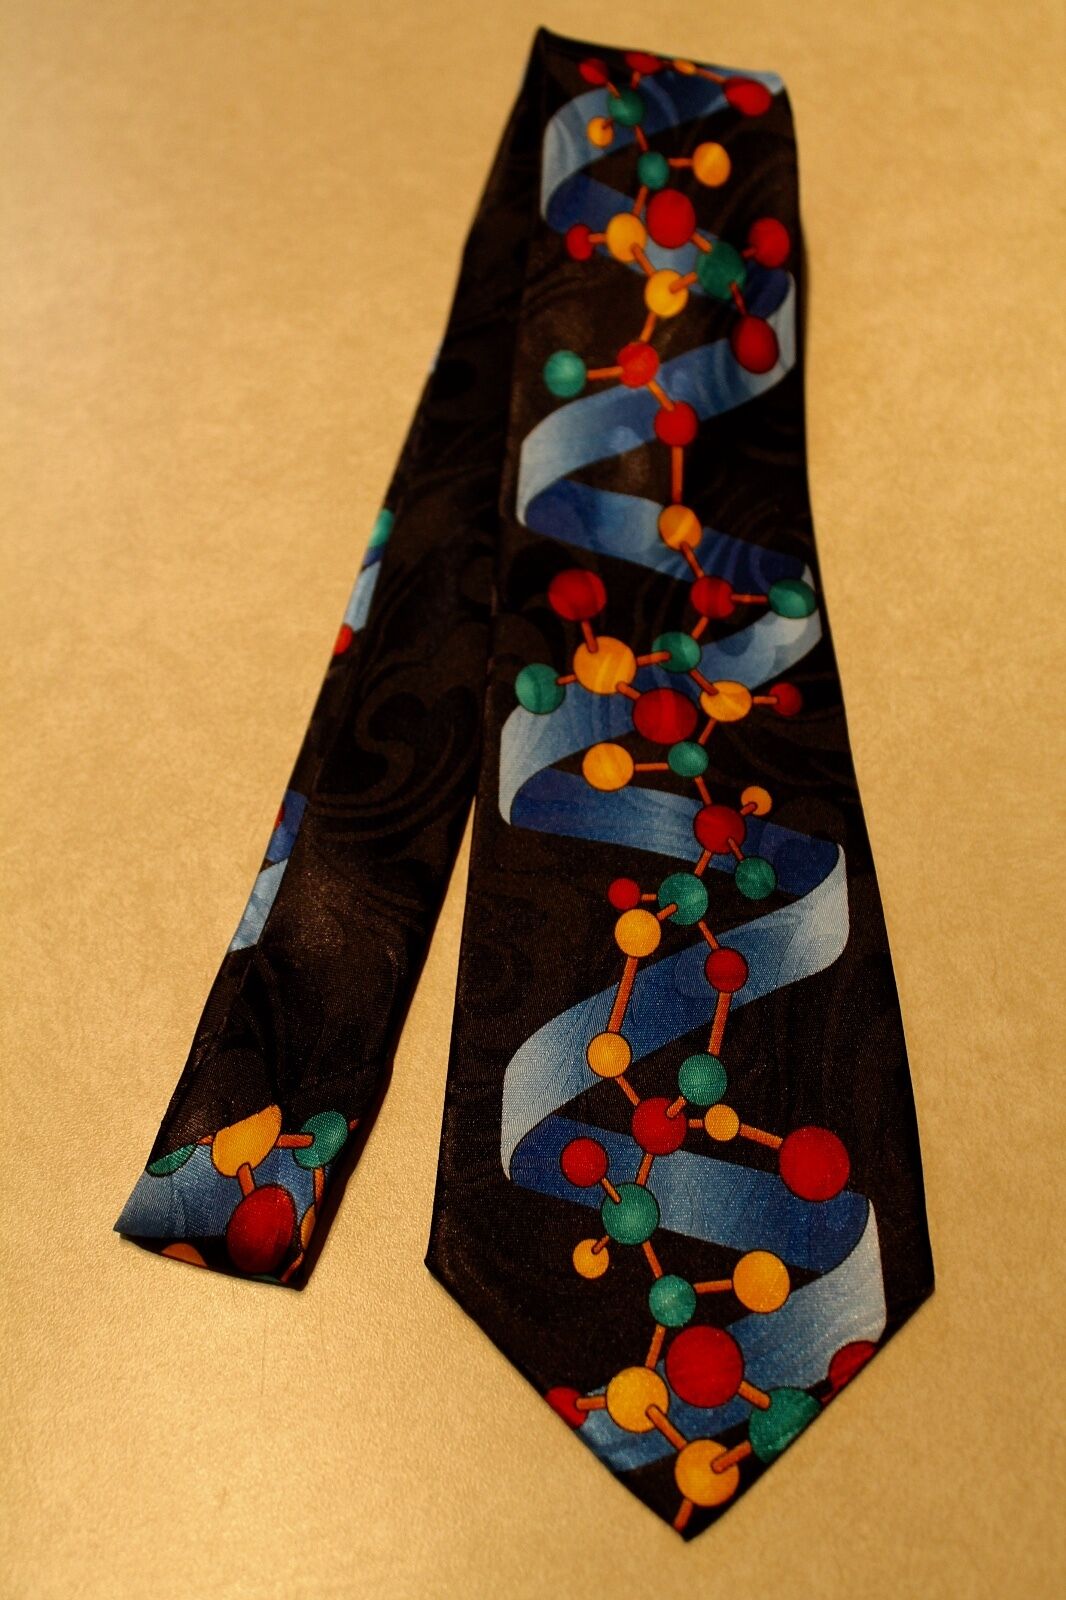   Teacher Chemistry Biology Molecules / DNA Science New Navy Blue Neck Tie 